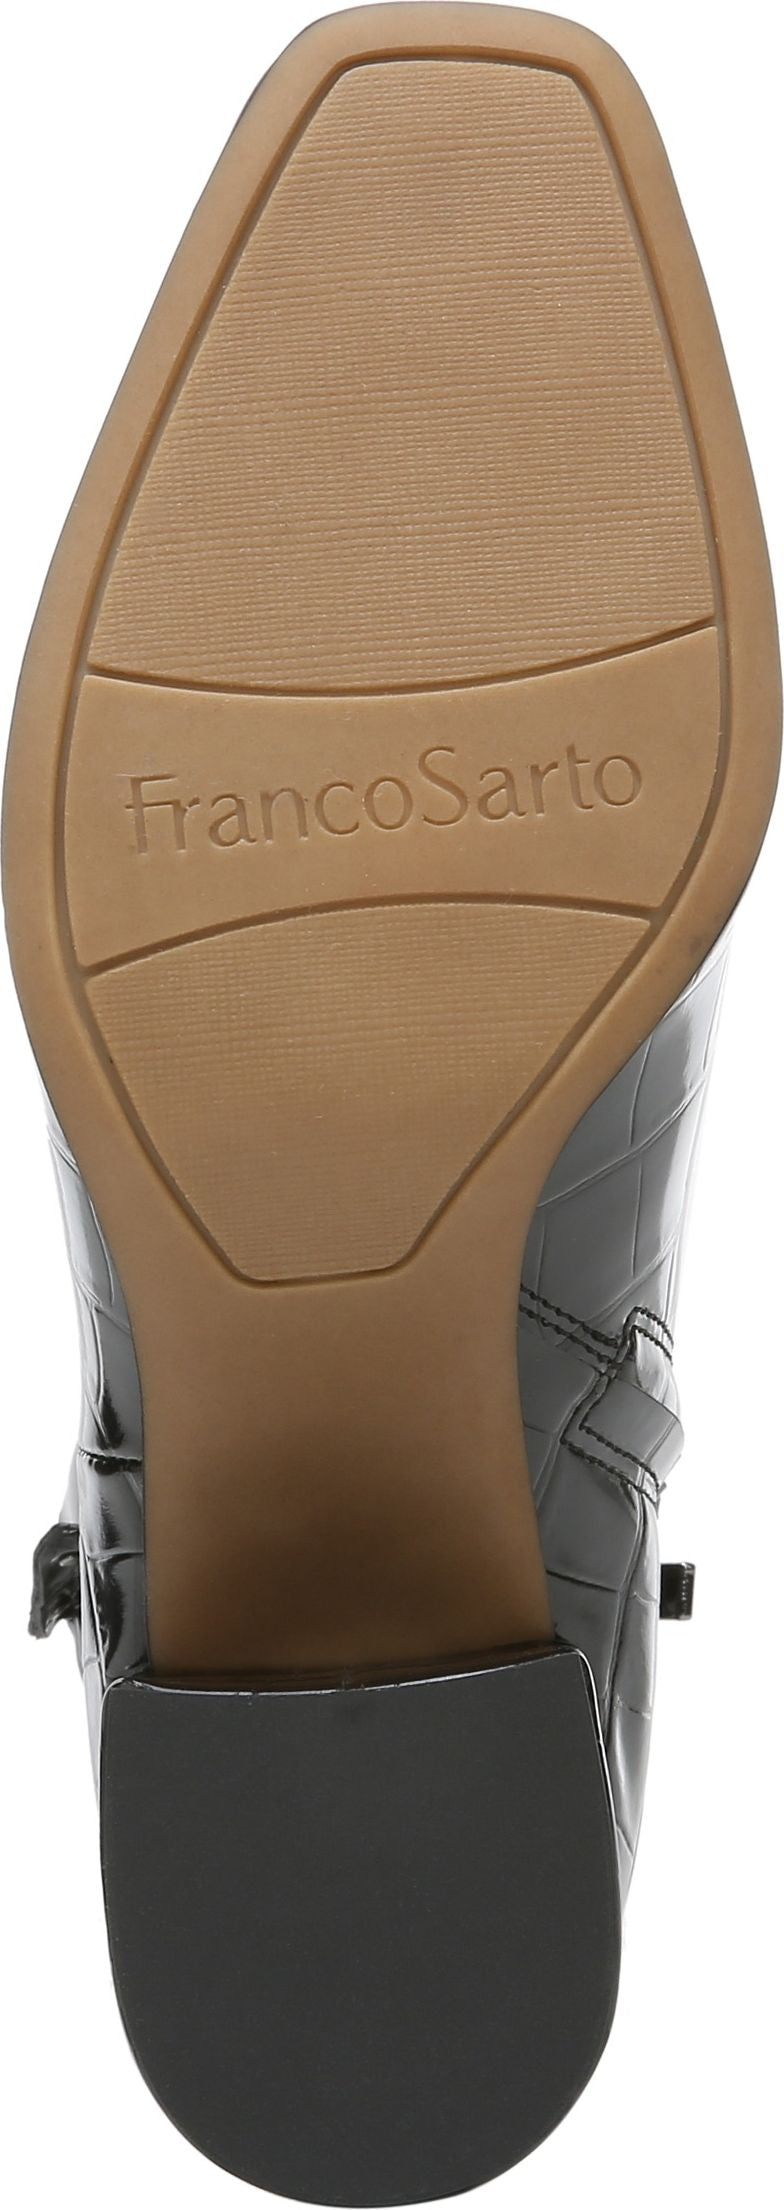 Franco Sarto Boots Tenton Black Croc